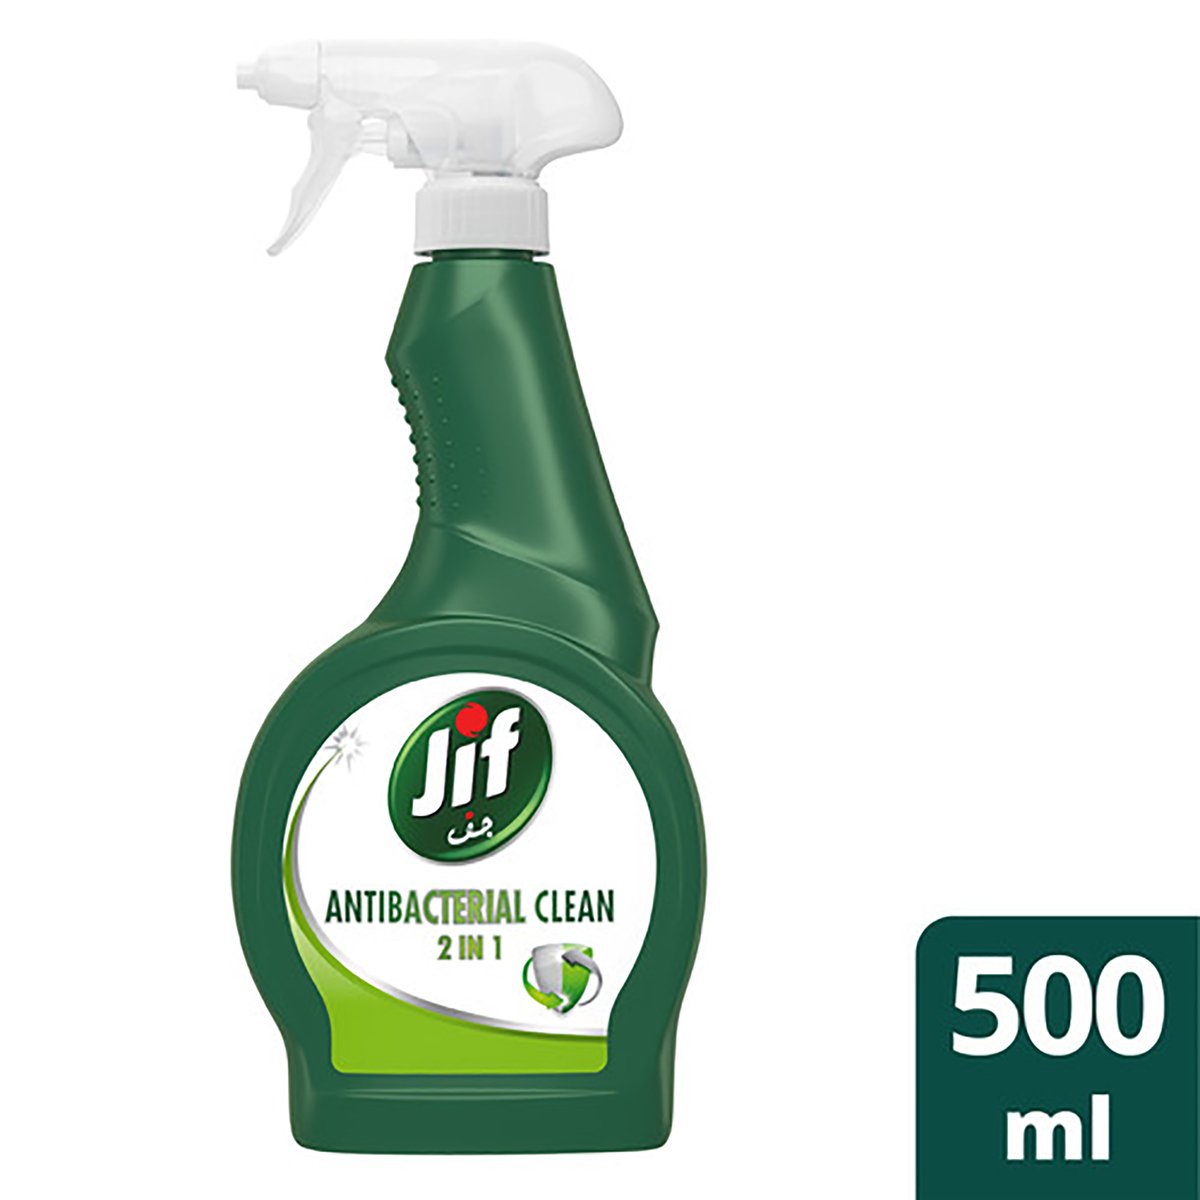 Jif 2in1 Anti-Bacterial Spray 500ml